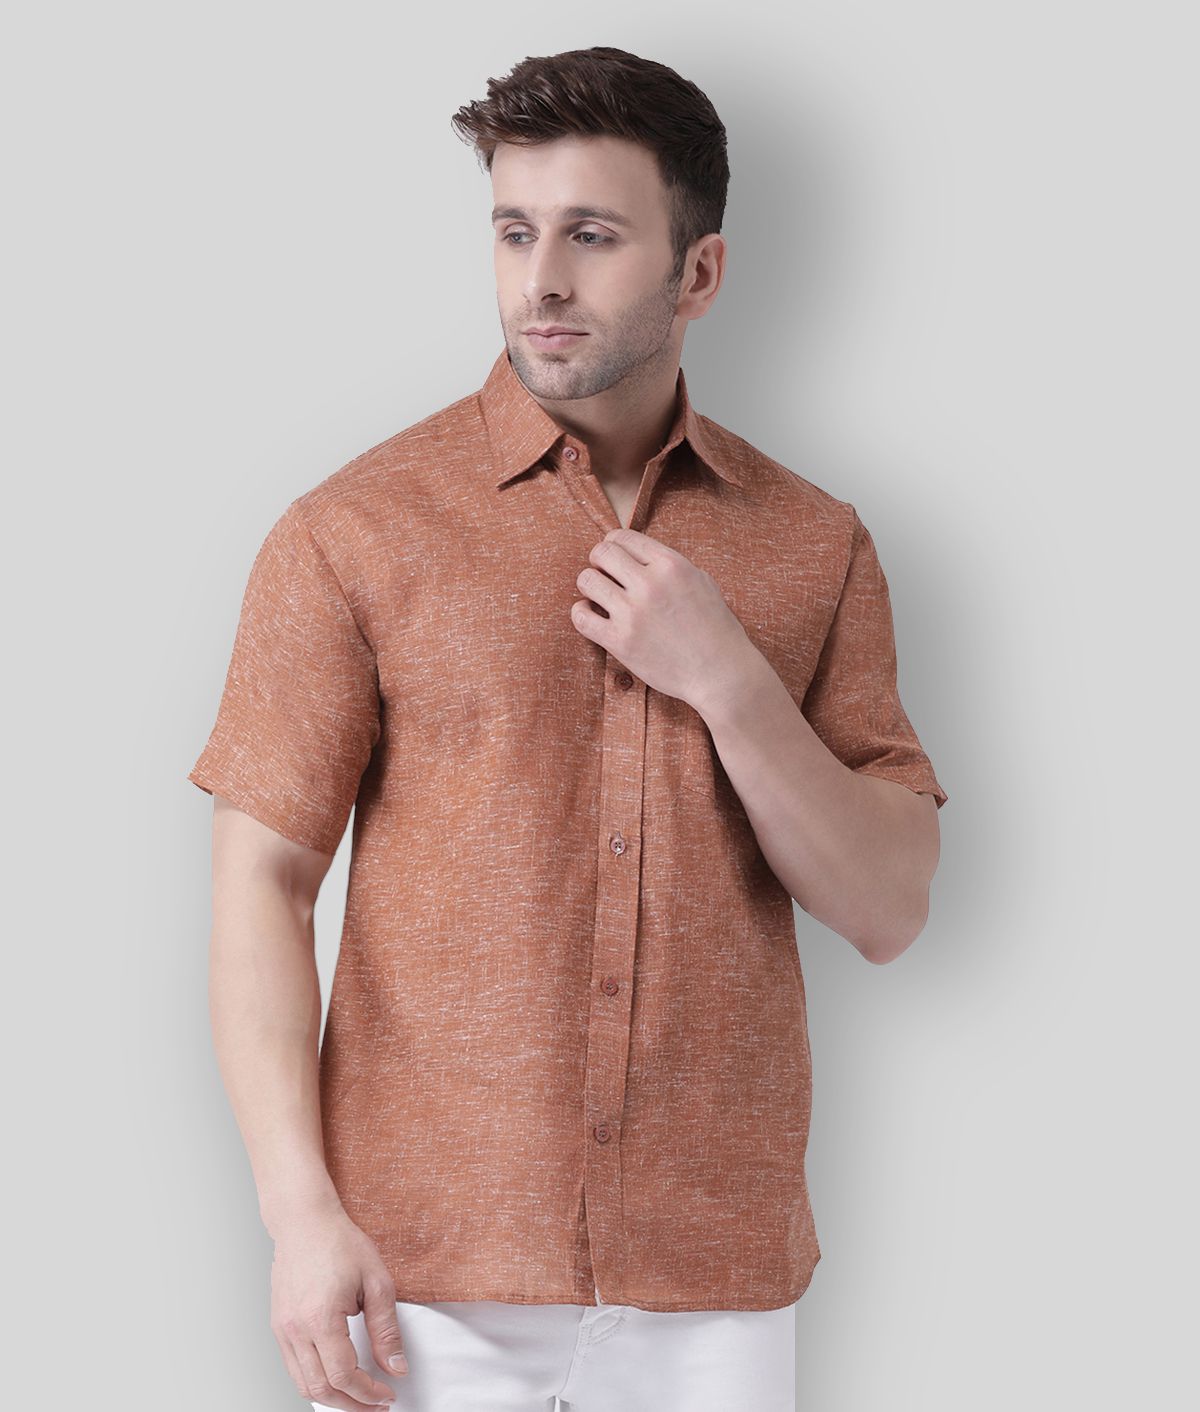 RIAG - Brown Cotton Regular Fit Men's Casual Shirt (Pack of 1 )